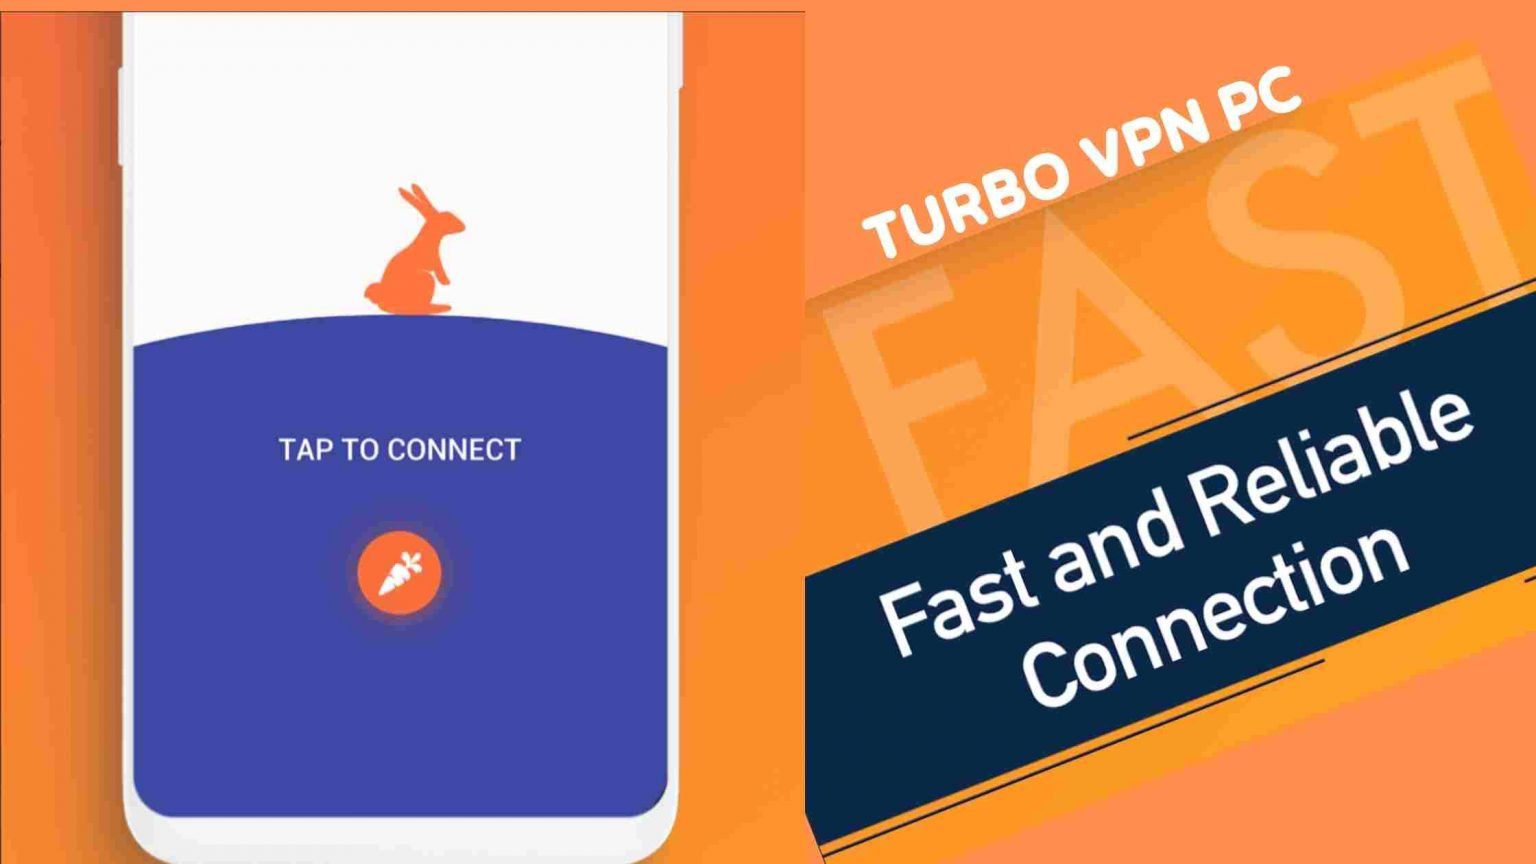 Turbo VPN for PC free download Windows 7/8/10